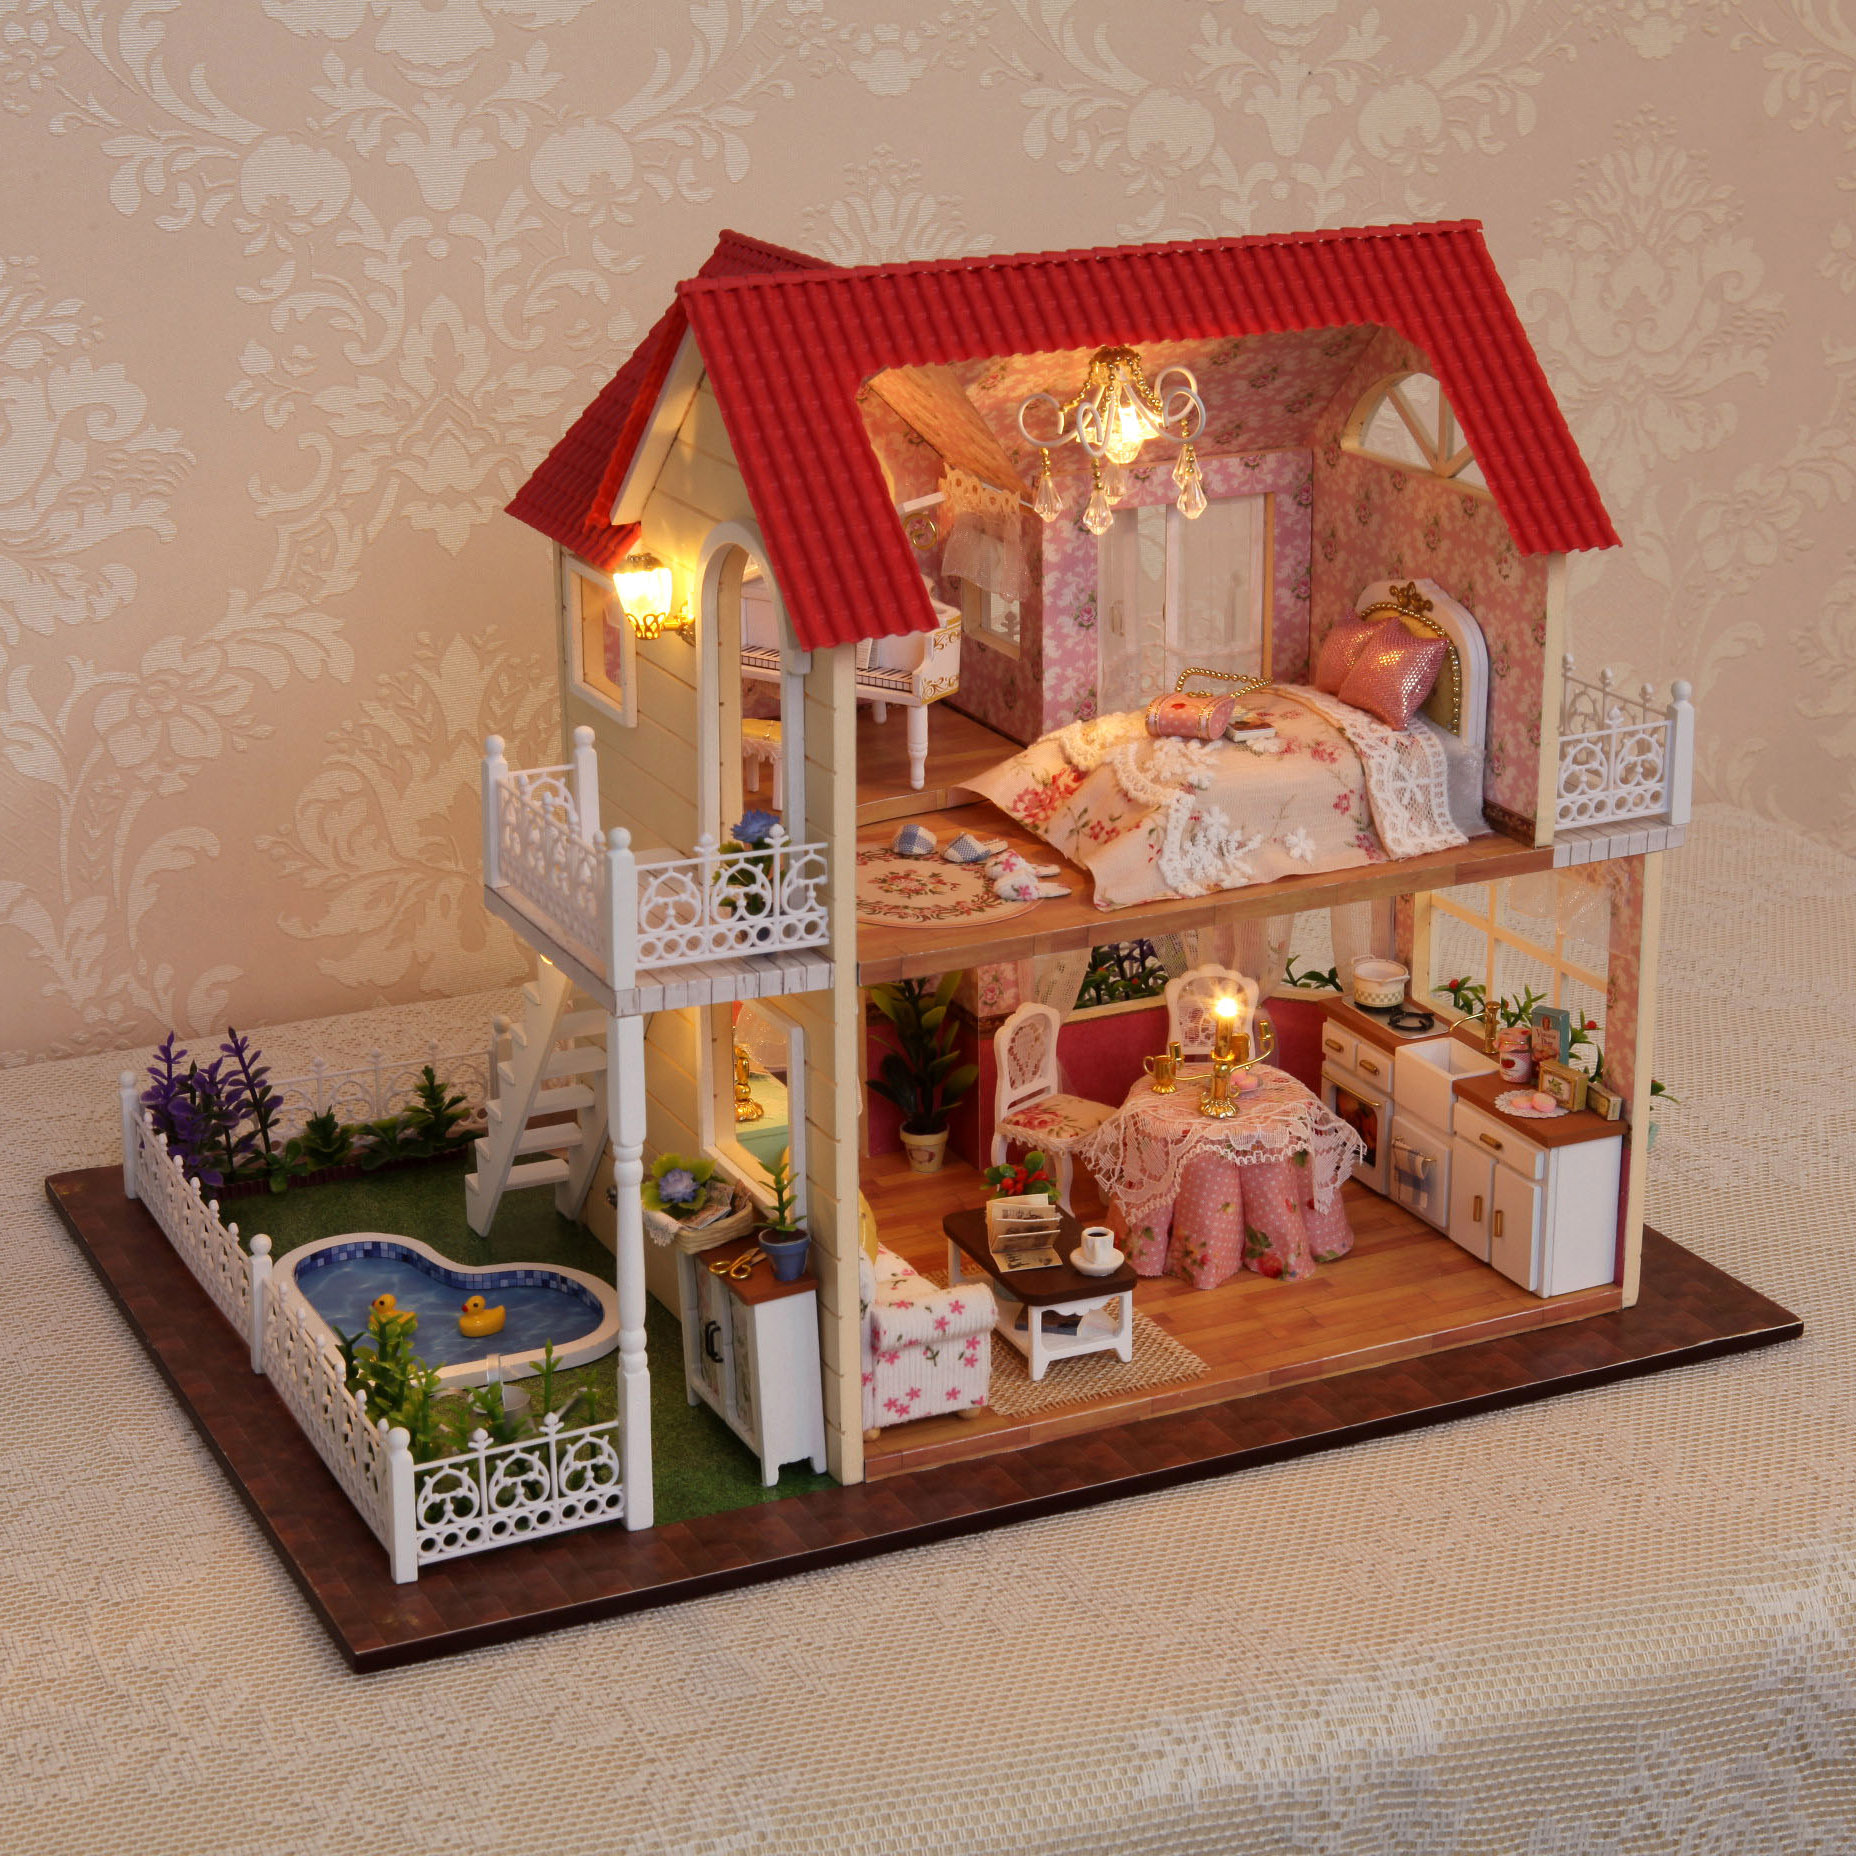 

Cuteroom DIY Wooden Dollhouse Princess Room Handmade Decorations Birthday Gift